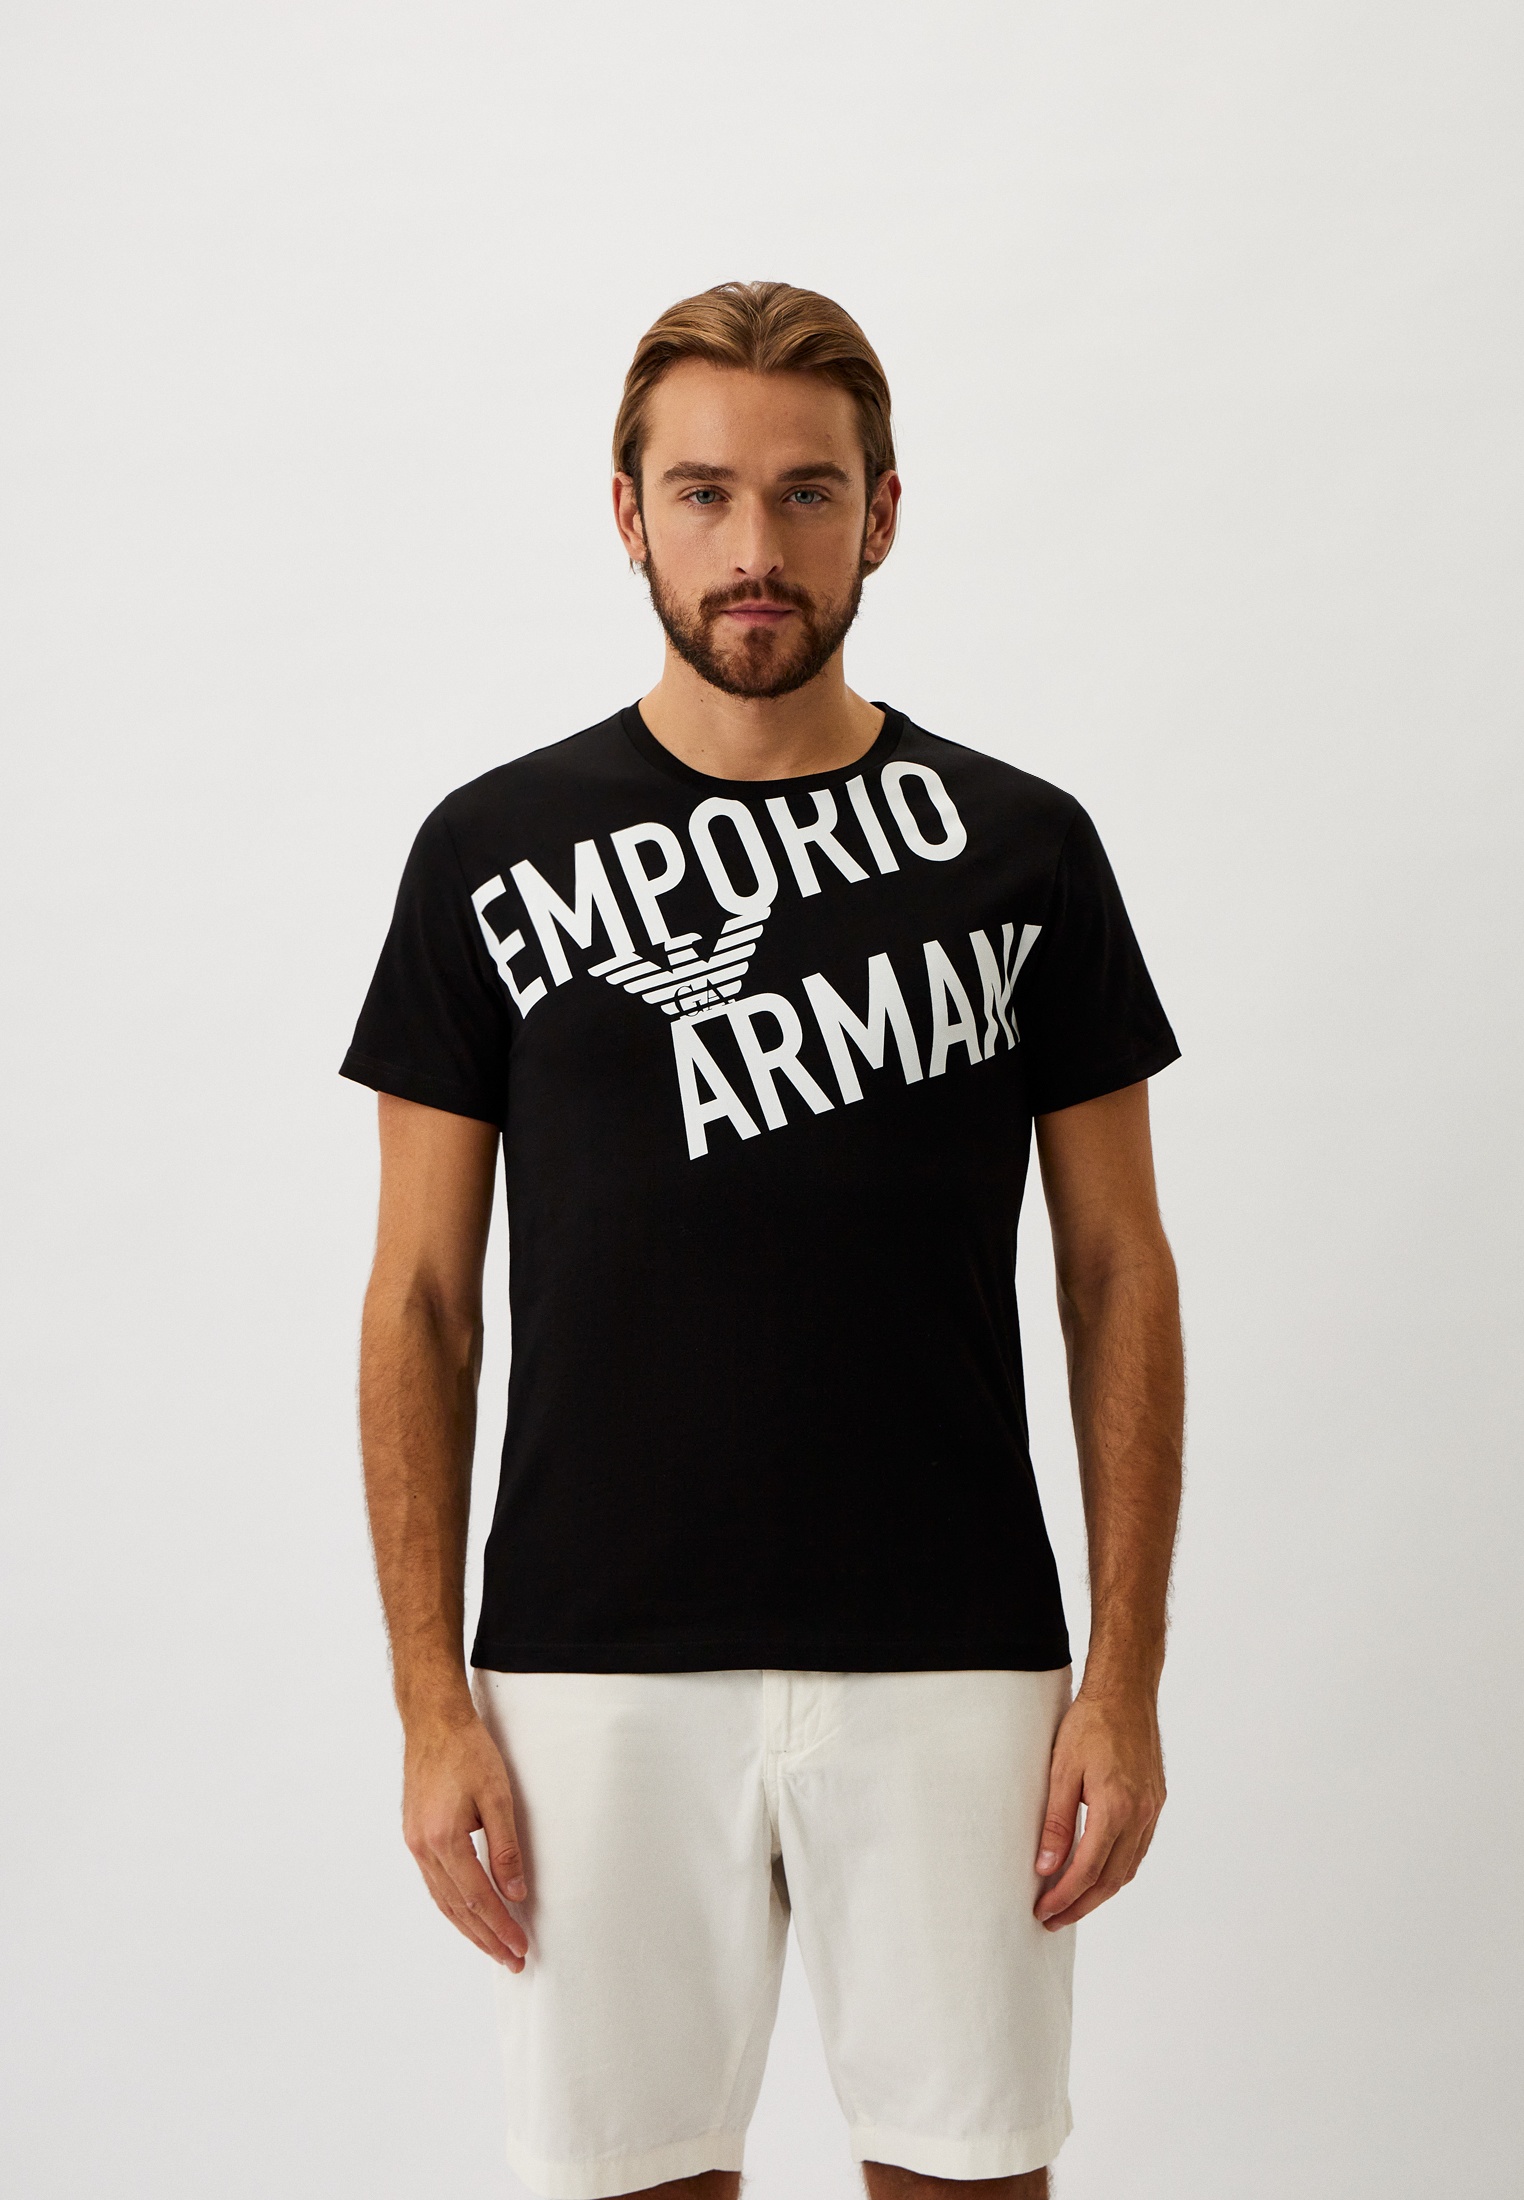 Мужская футболка Emporio Armani (Эмпорио Армани) 3R476211818: изображение 1